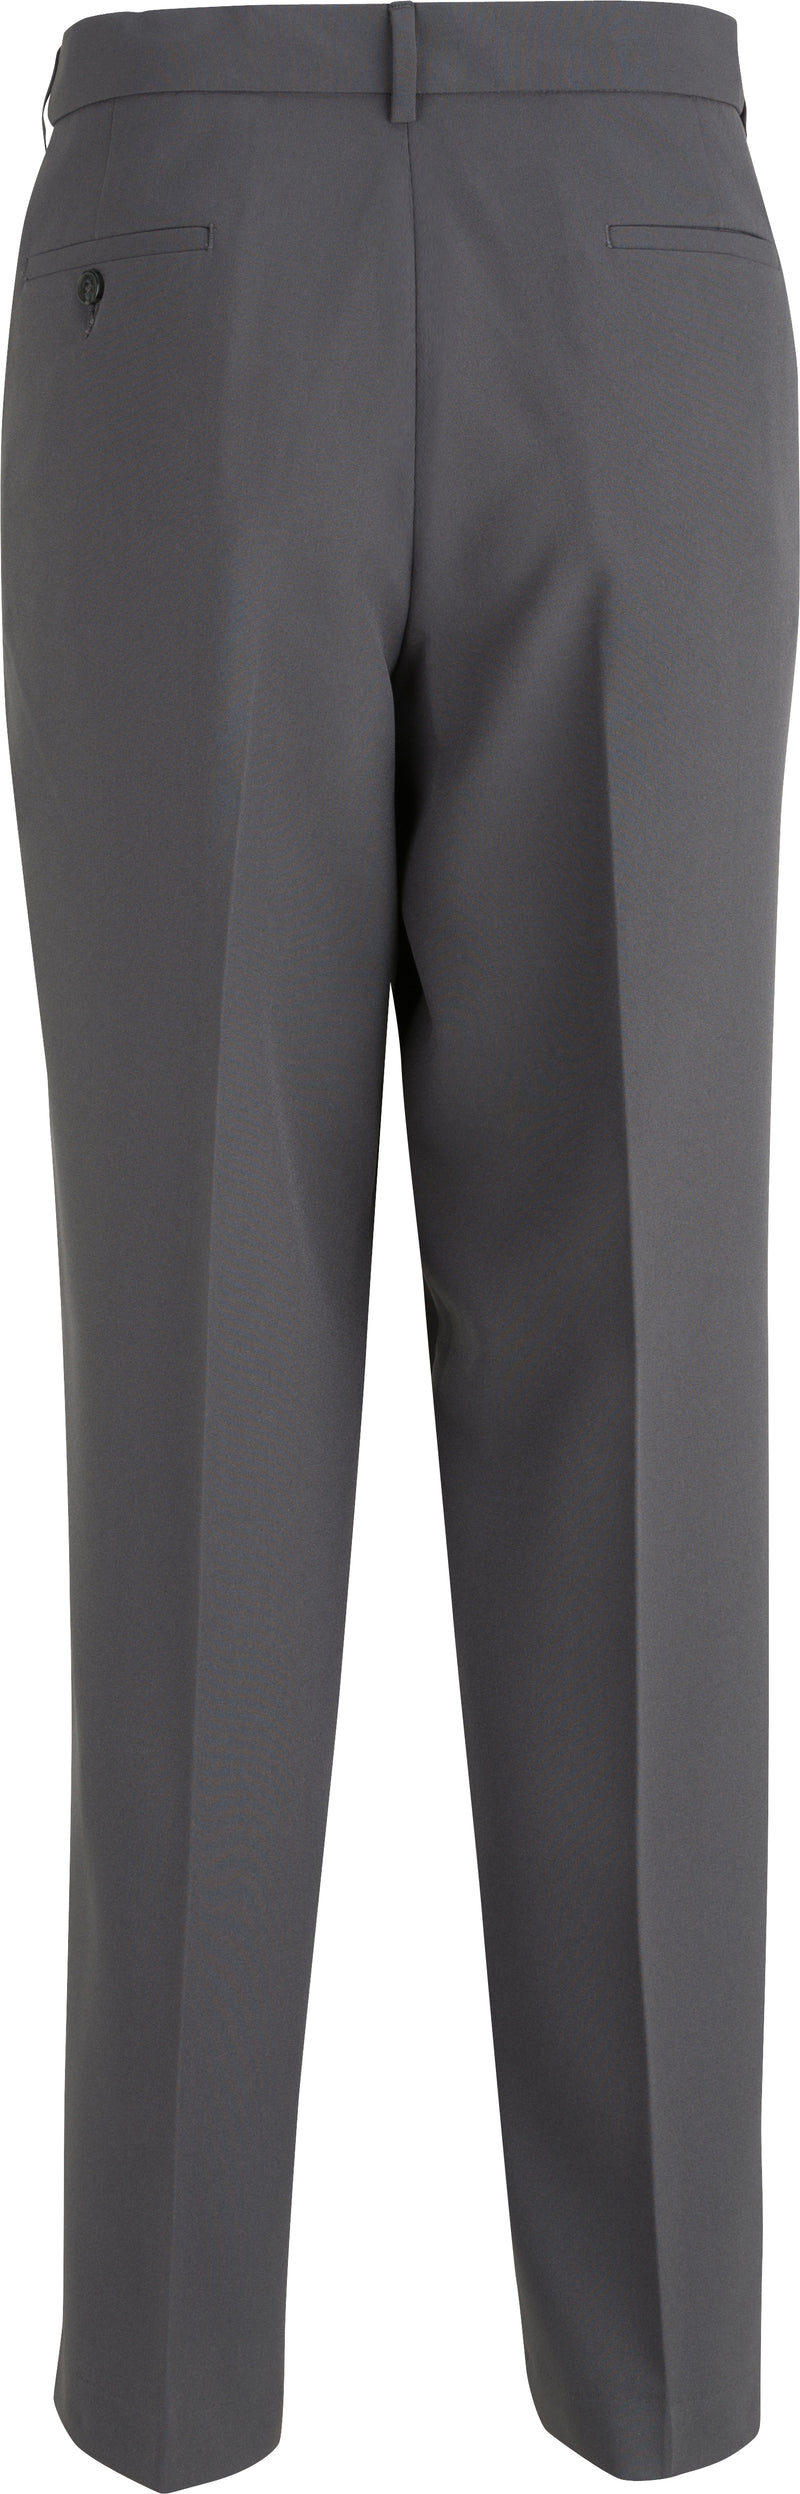 Edwards Garment [2793] Essential Flat Front Pant. Live Chat For Bulk Discounts.